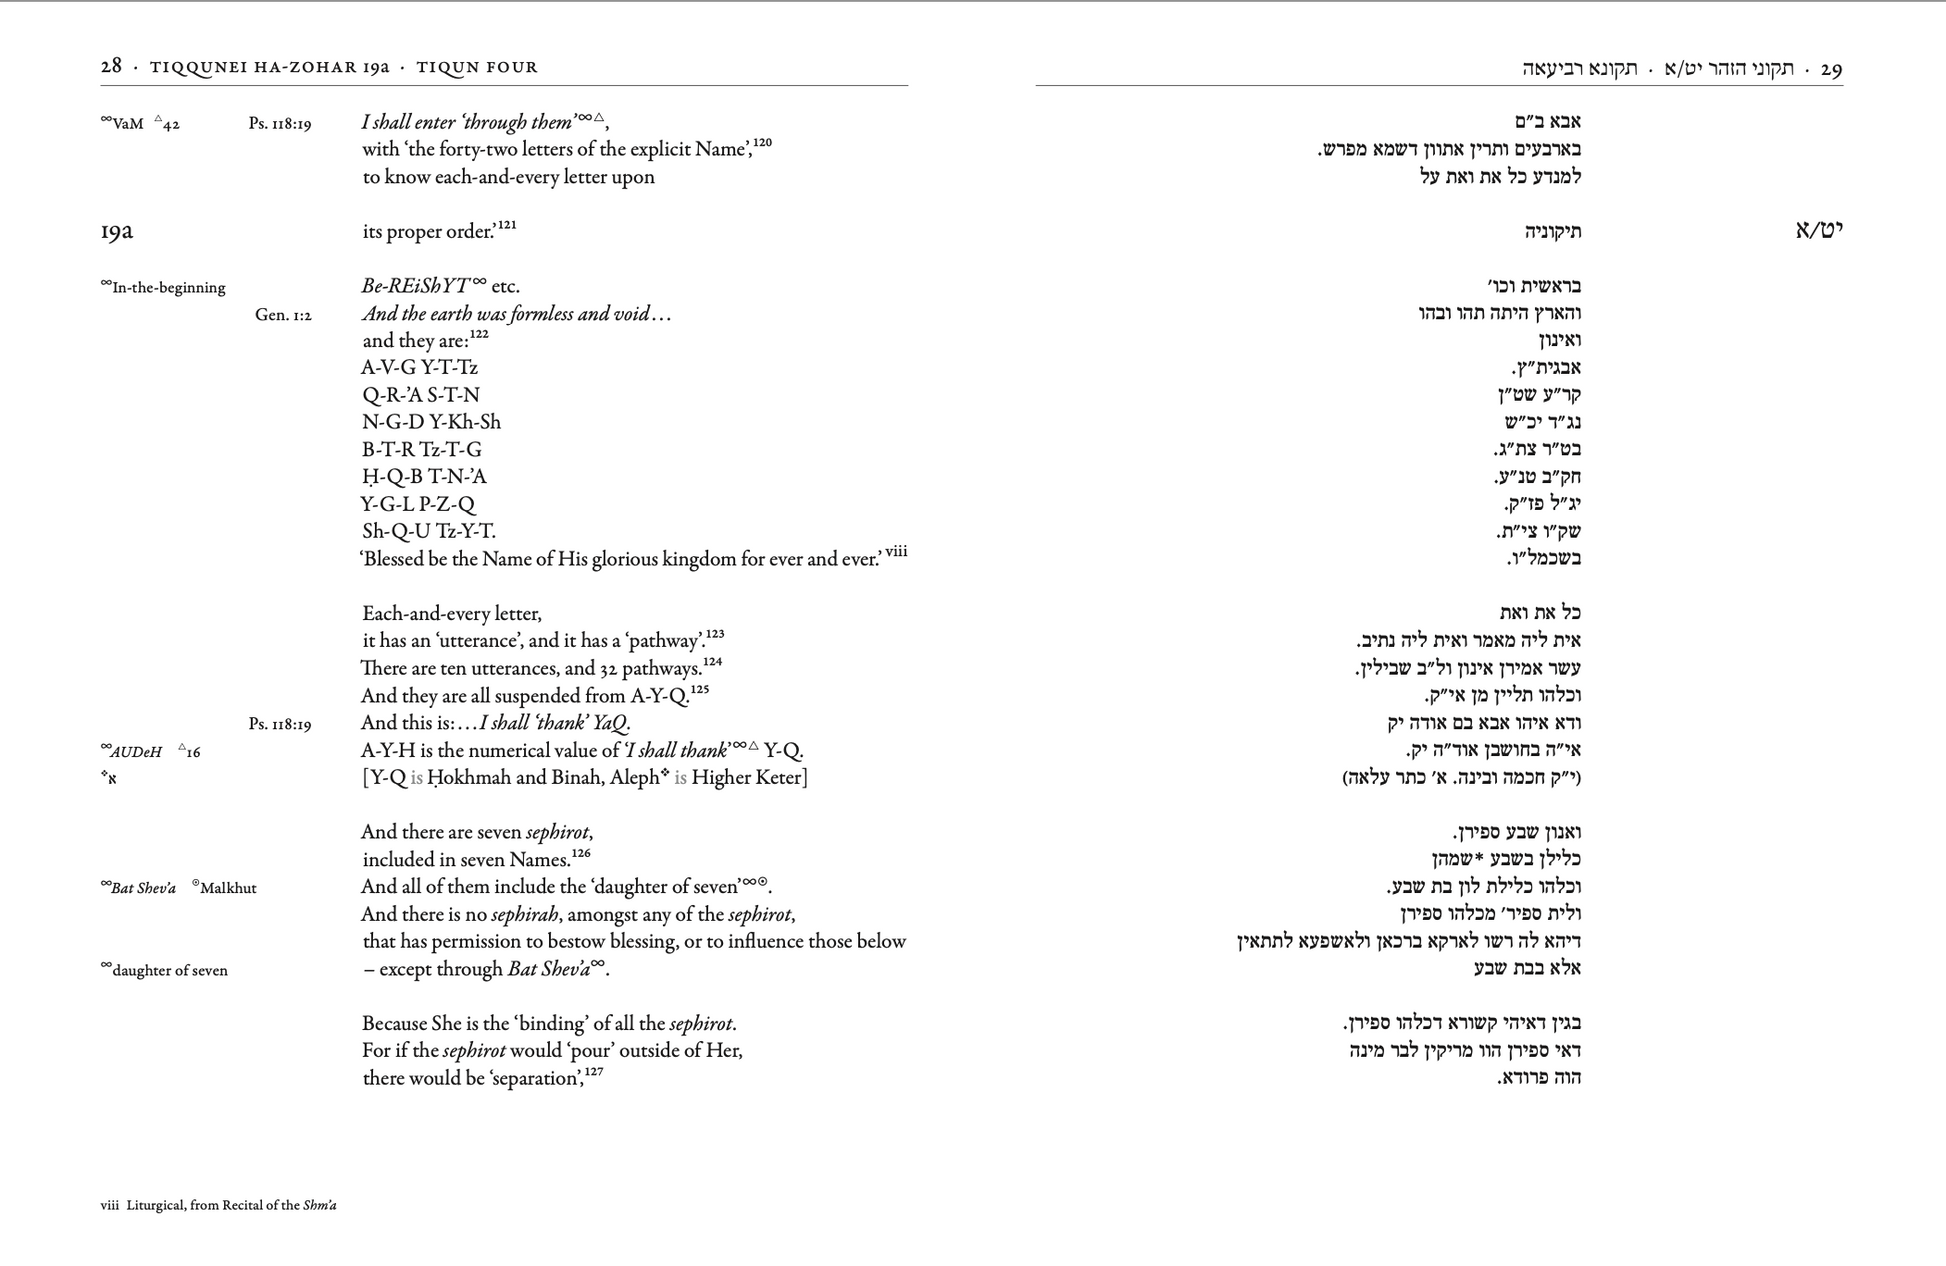 Tikkunei Zohar - Tiqun Four (English translation from bilingual page spread taken from Tiqqunei ha-Zohar Margalya)